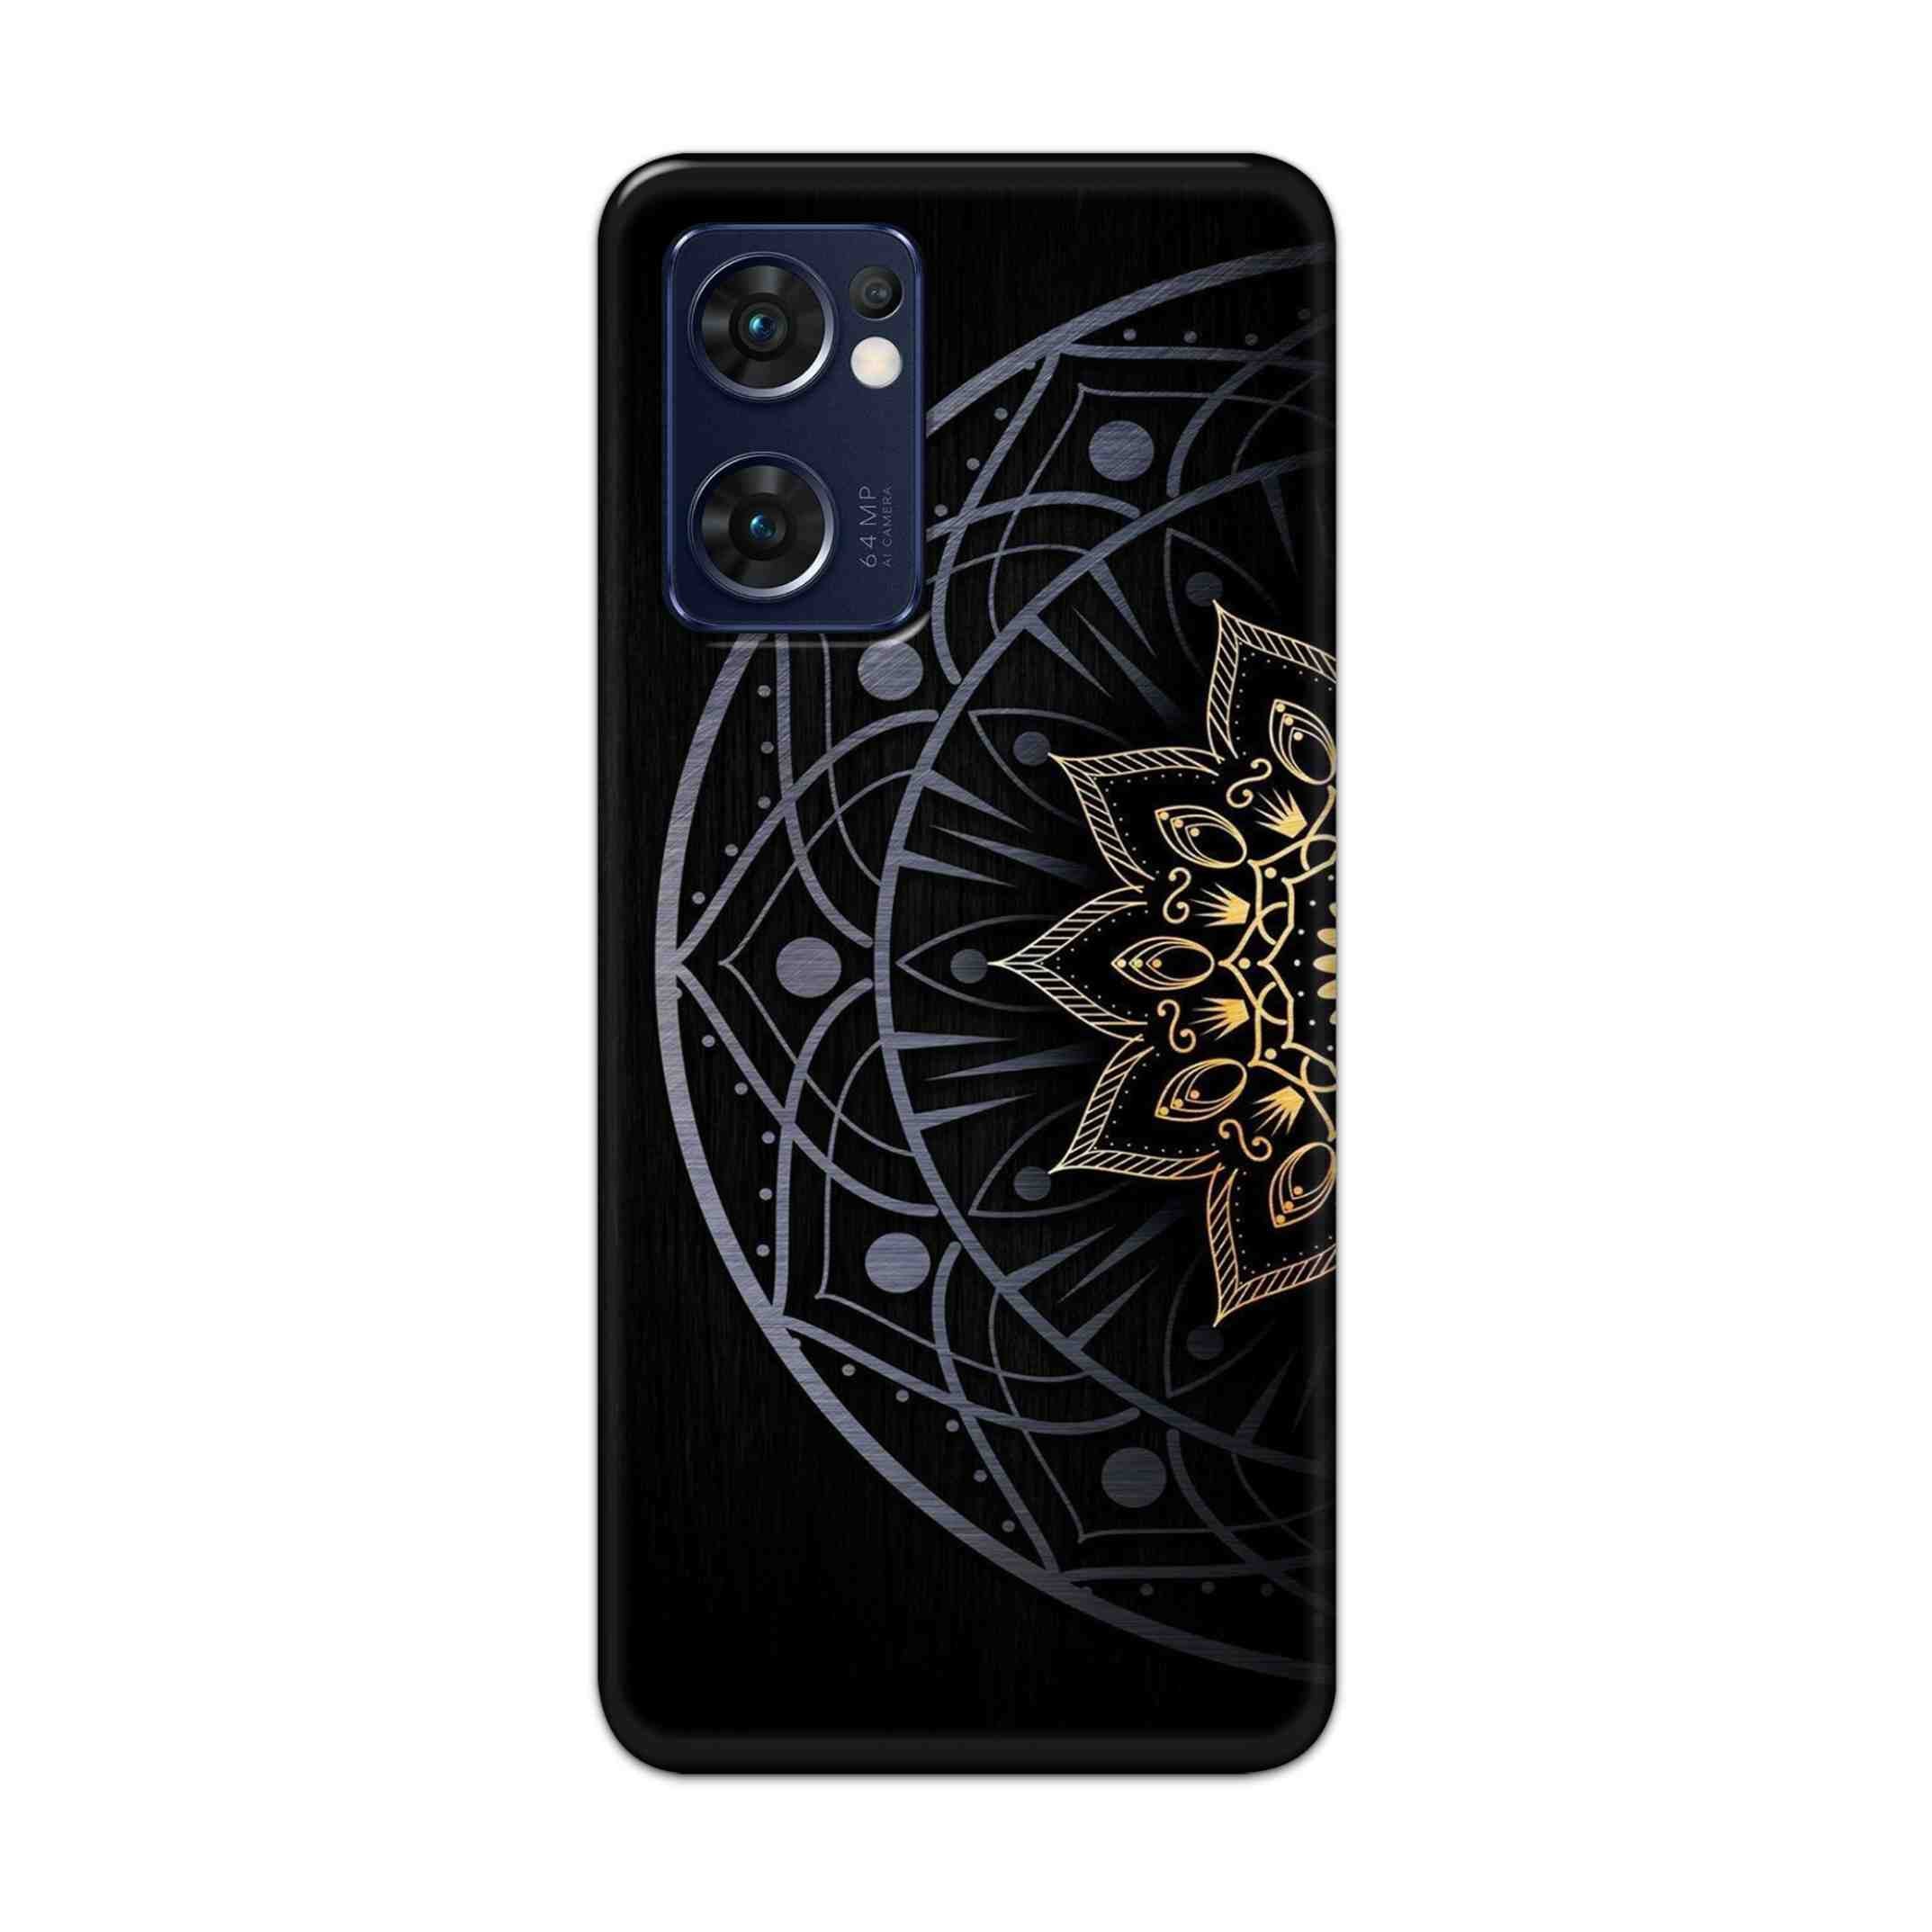 Buy Psychedelic Mandalas Hard Back Mobile Phone Case Cover For Reno 7 5G Online